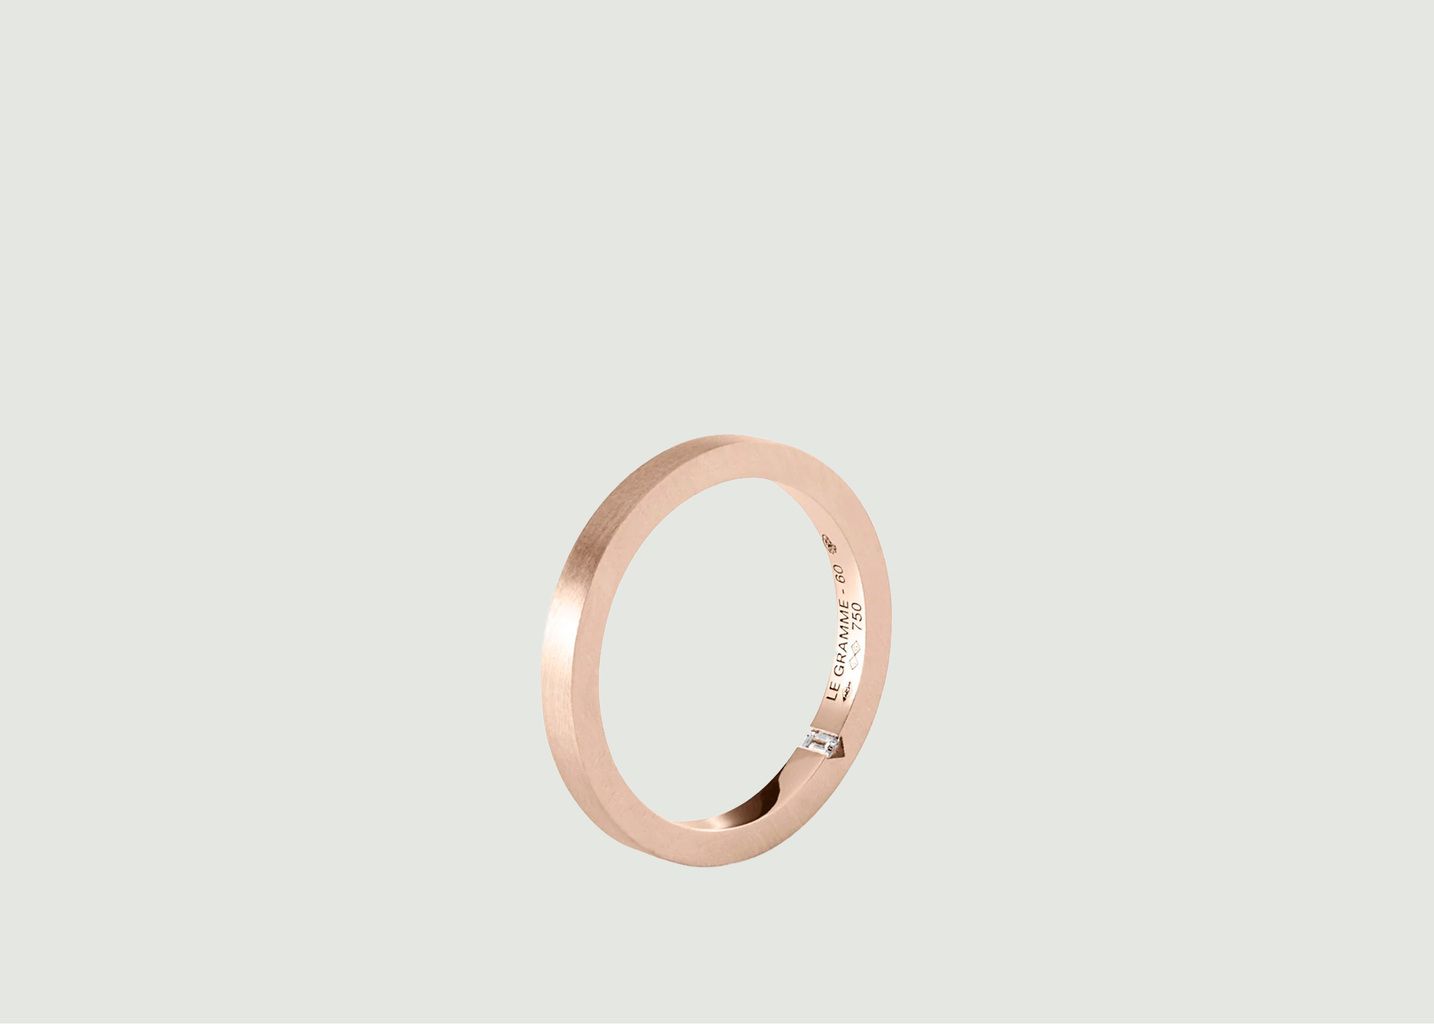 Wedding ring 5g Diamond - Le Gramme